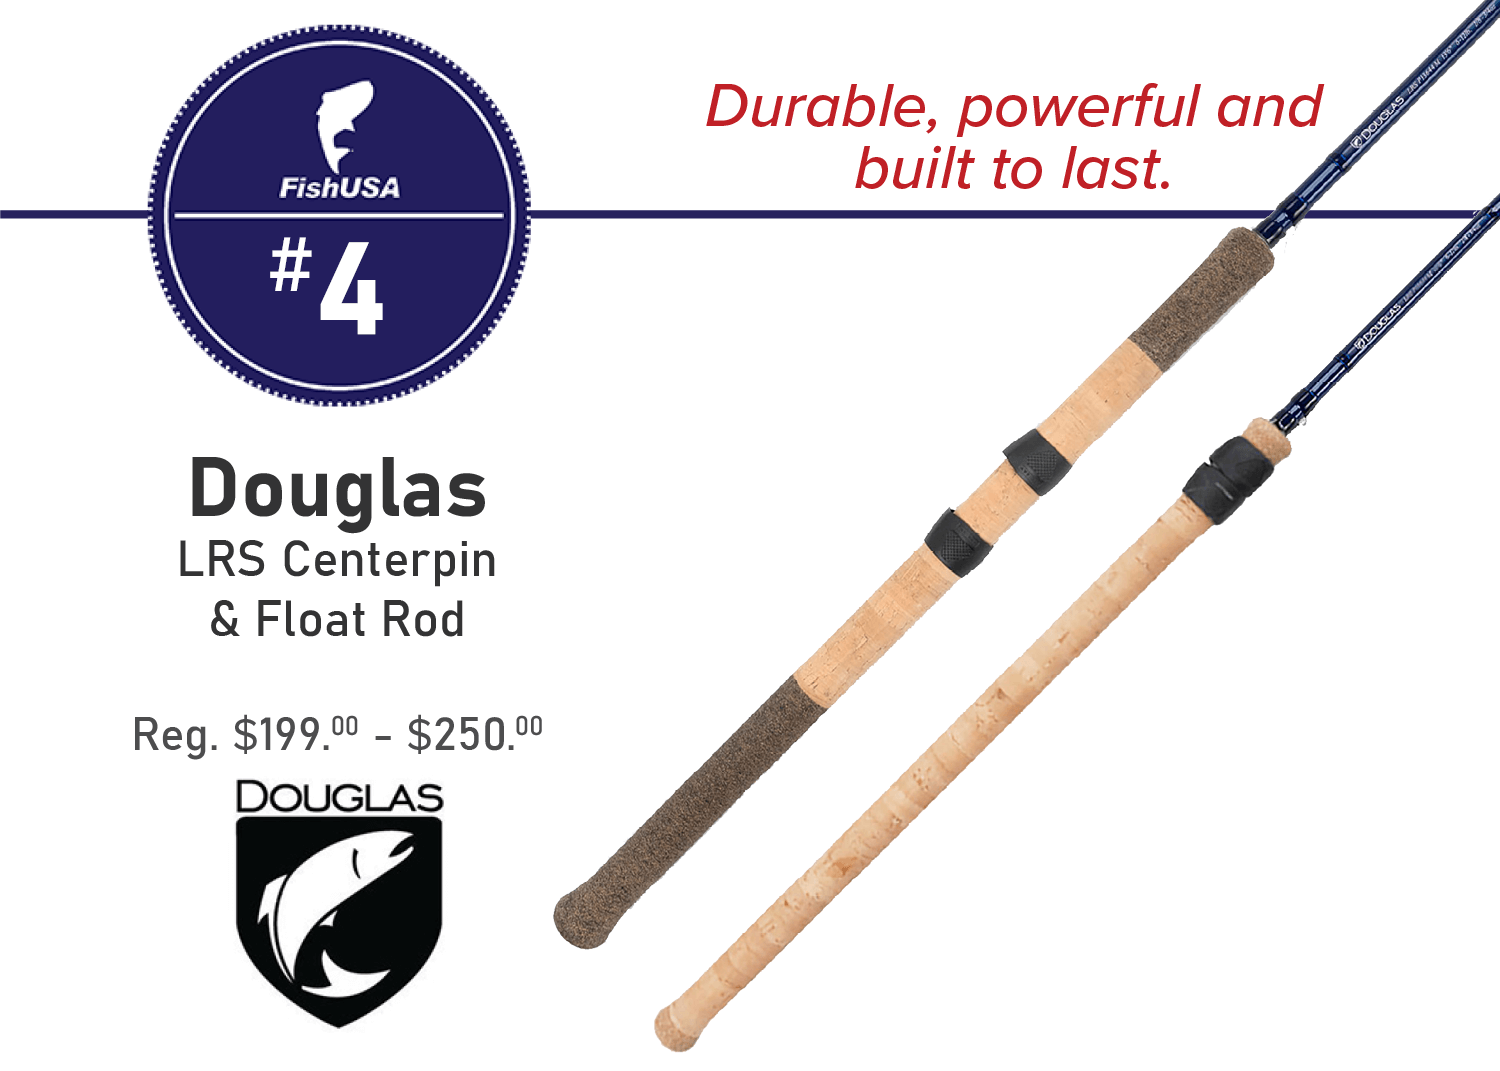 Douglas LRS Centerpin & Float Rod